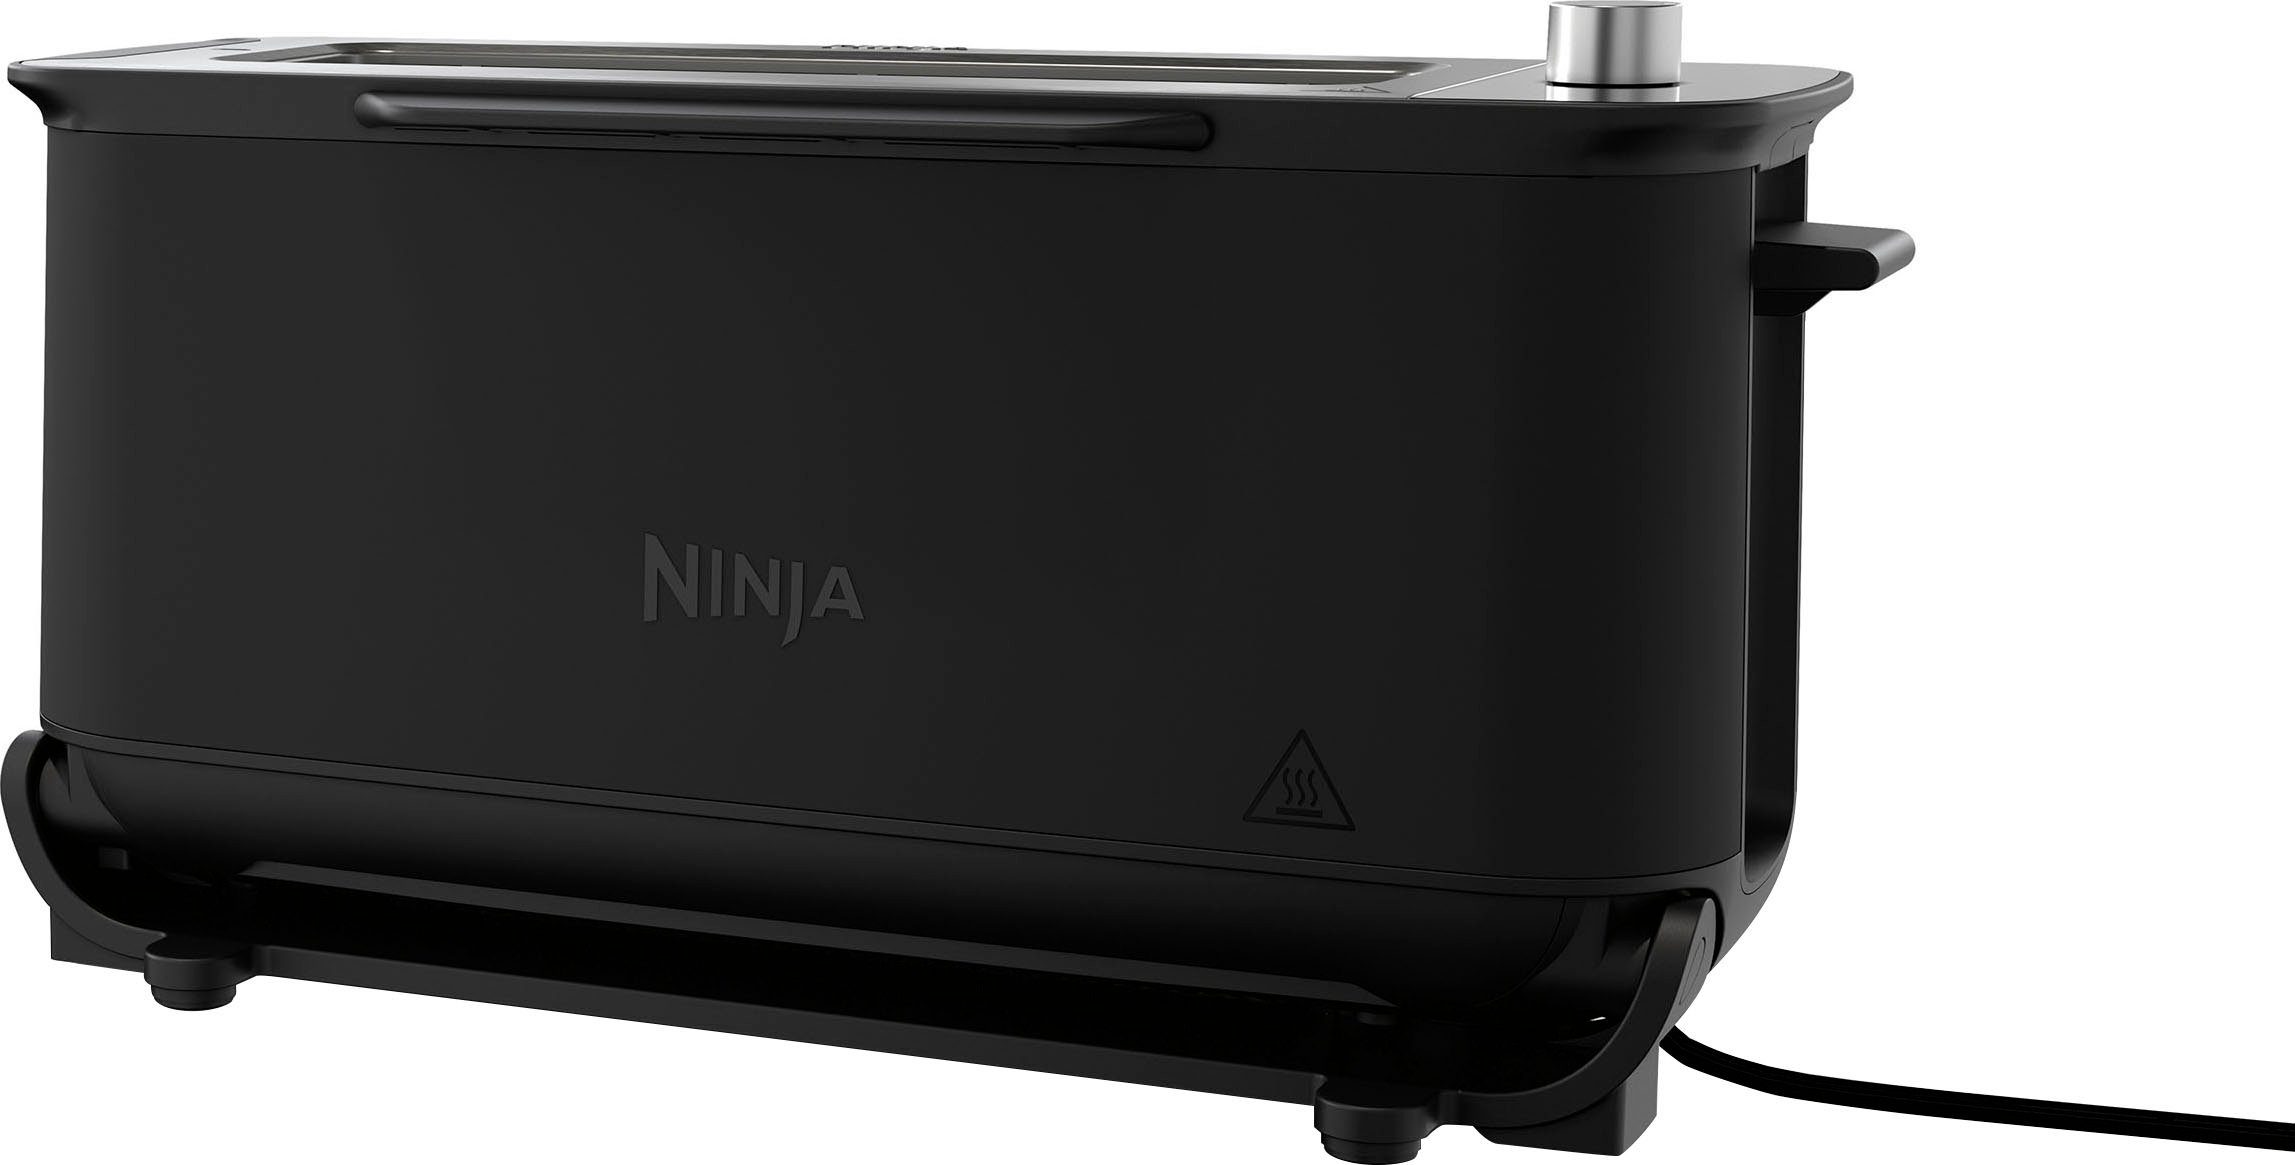 https://i.otto.nl/i/otto/798037a7-ea99-52e3-a2d4-e9d2fd908dc3/ninja-toaster-st100eu-ninja-foodi-2-in-1-toaster-grill-zwart.jpg?$ovnl_seo_index$